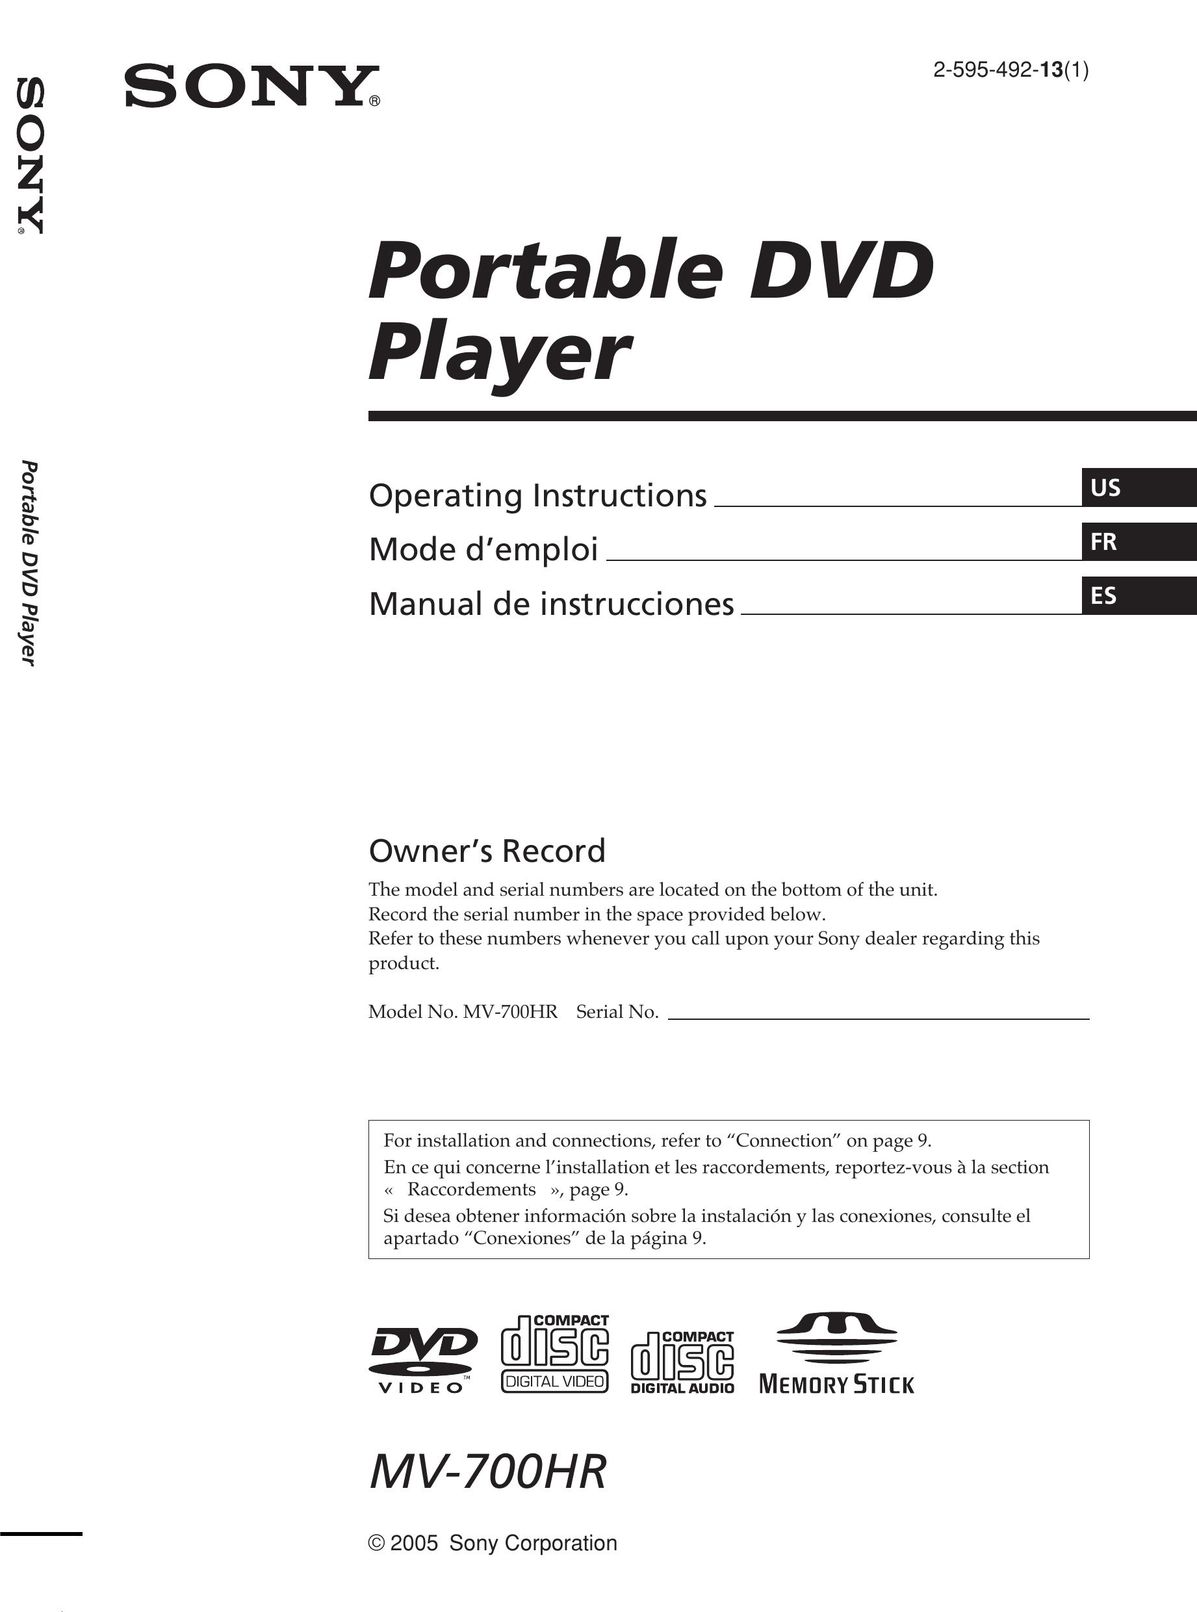 Sony MV-700HR Portable DVD Player User Manual